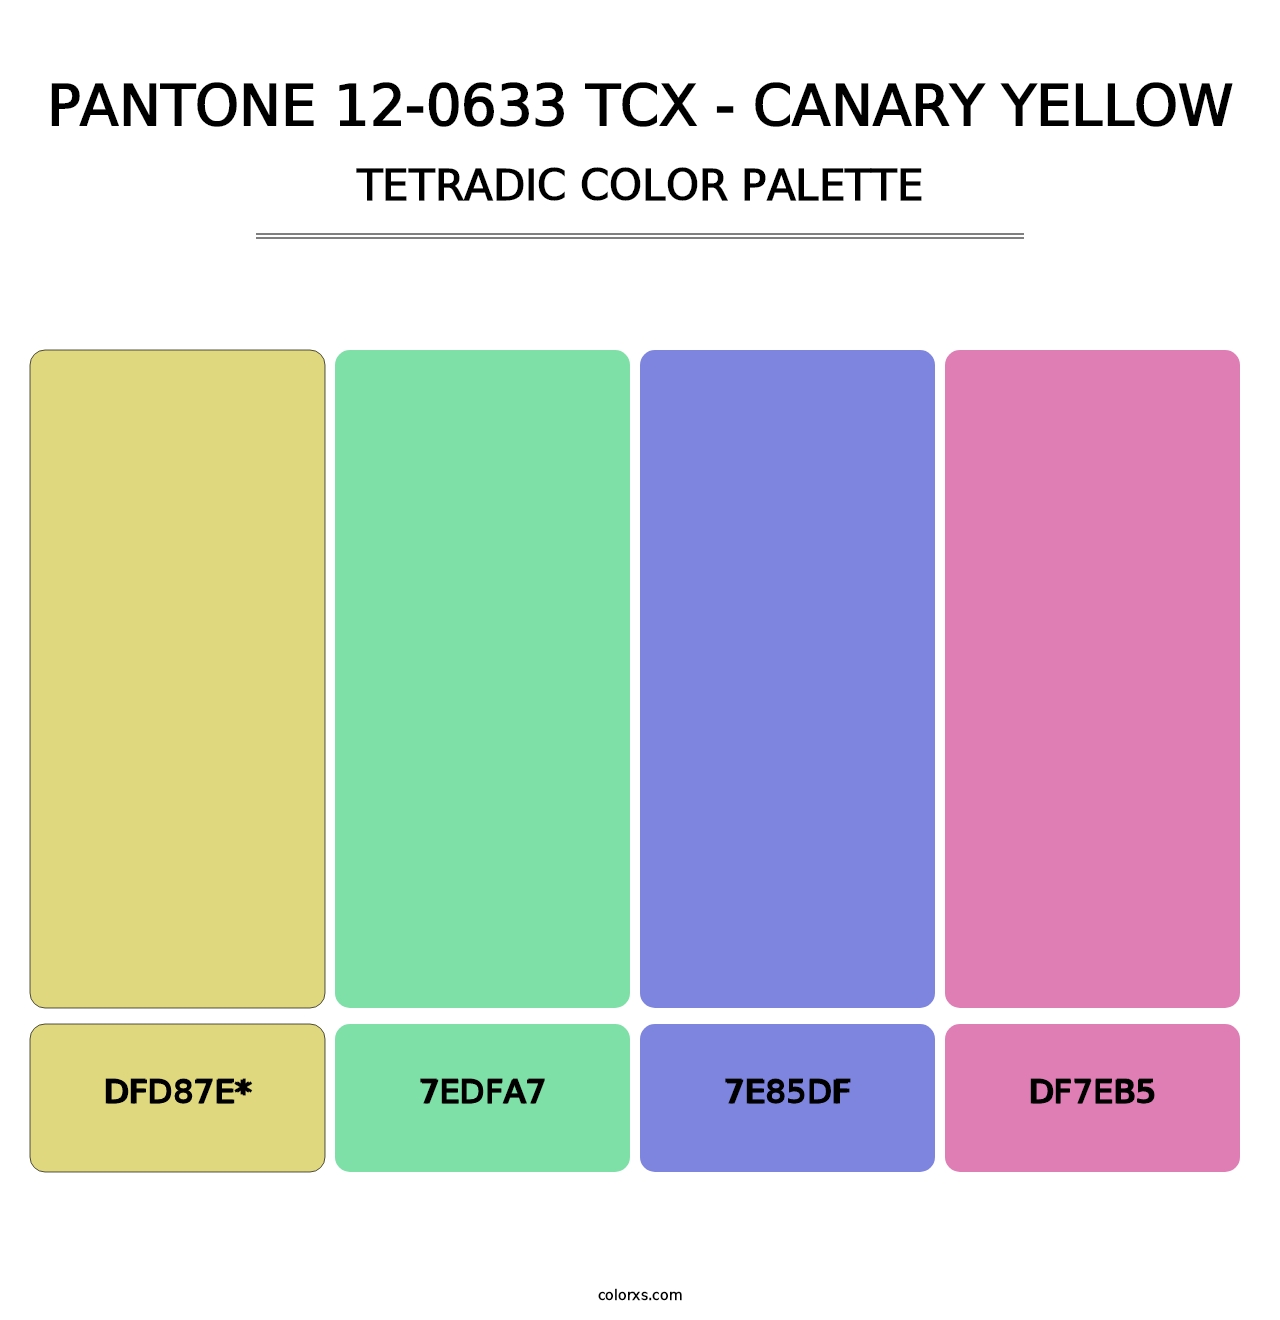 PANTONE 12-0633 TCX - Canary Yellow - Tetradic Color Palette